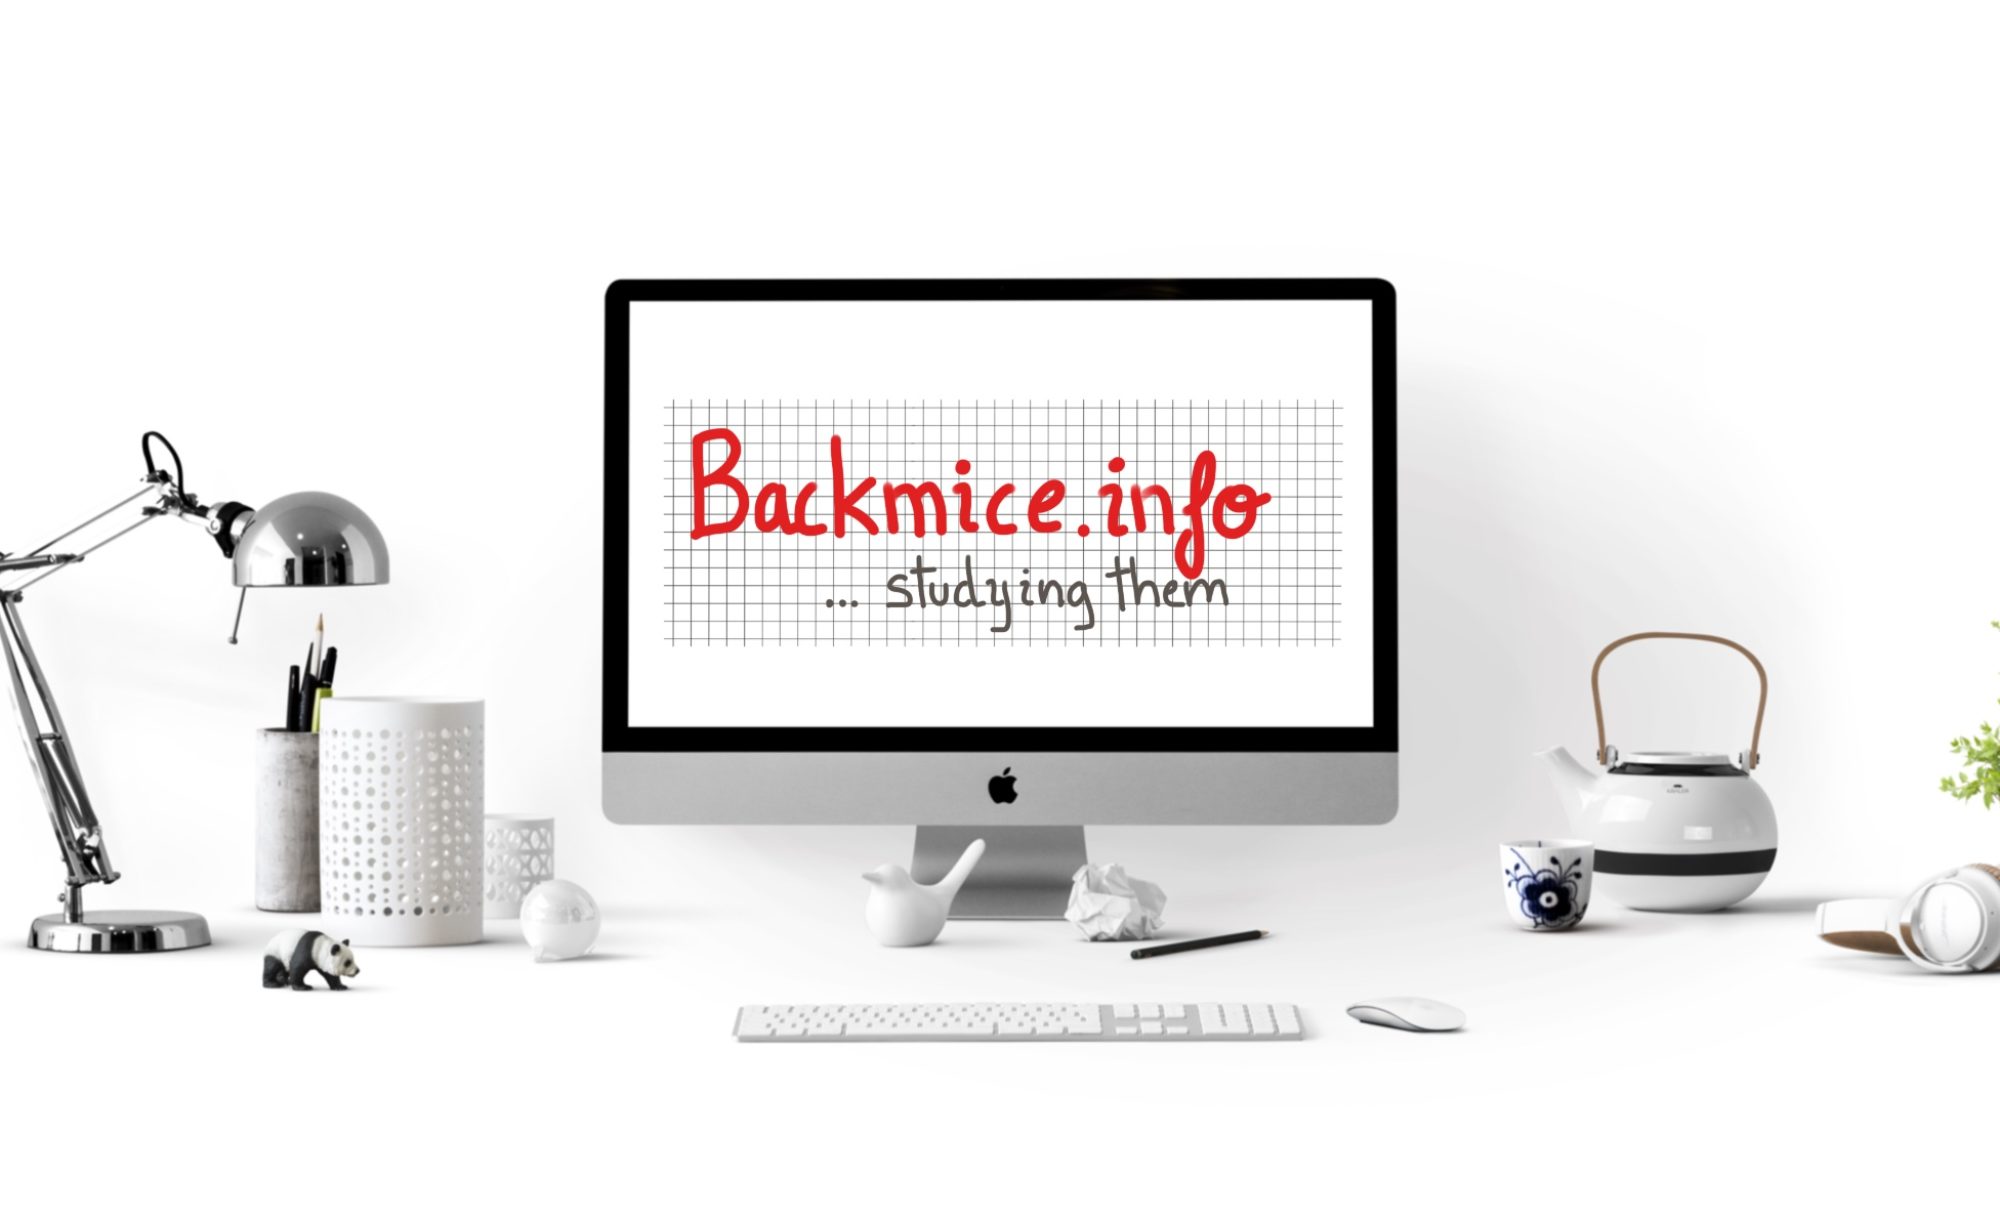 backmice.info